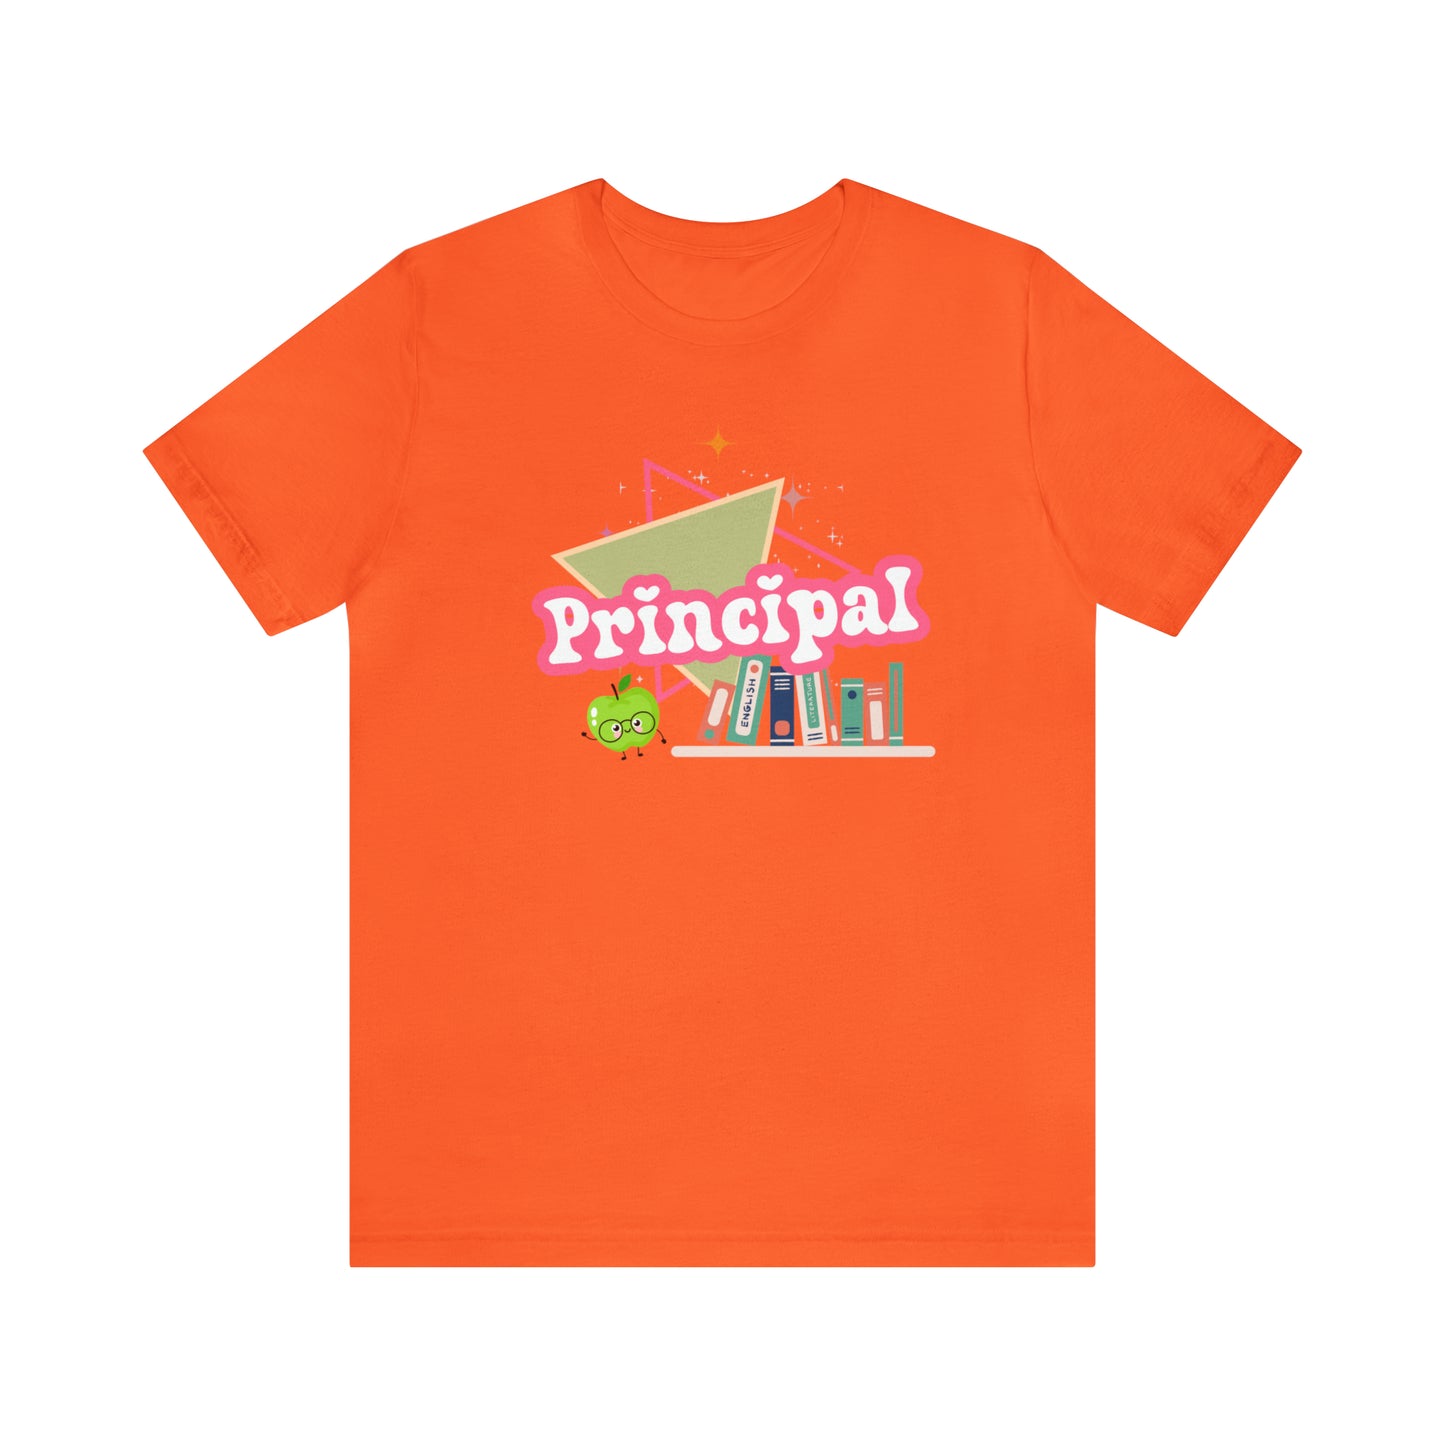 School Principal shirt, school admin shirt, colorful teacher shirt, 90s shirt, 90s teacher shirt, T547